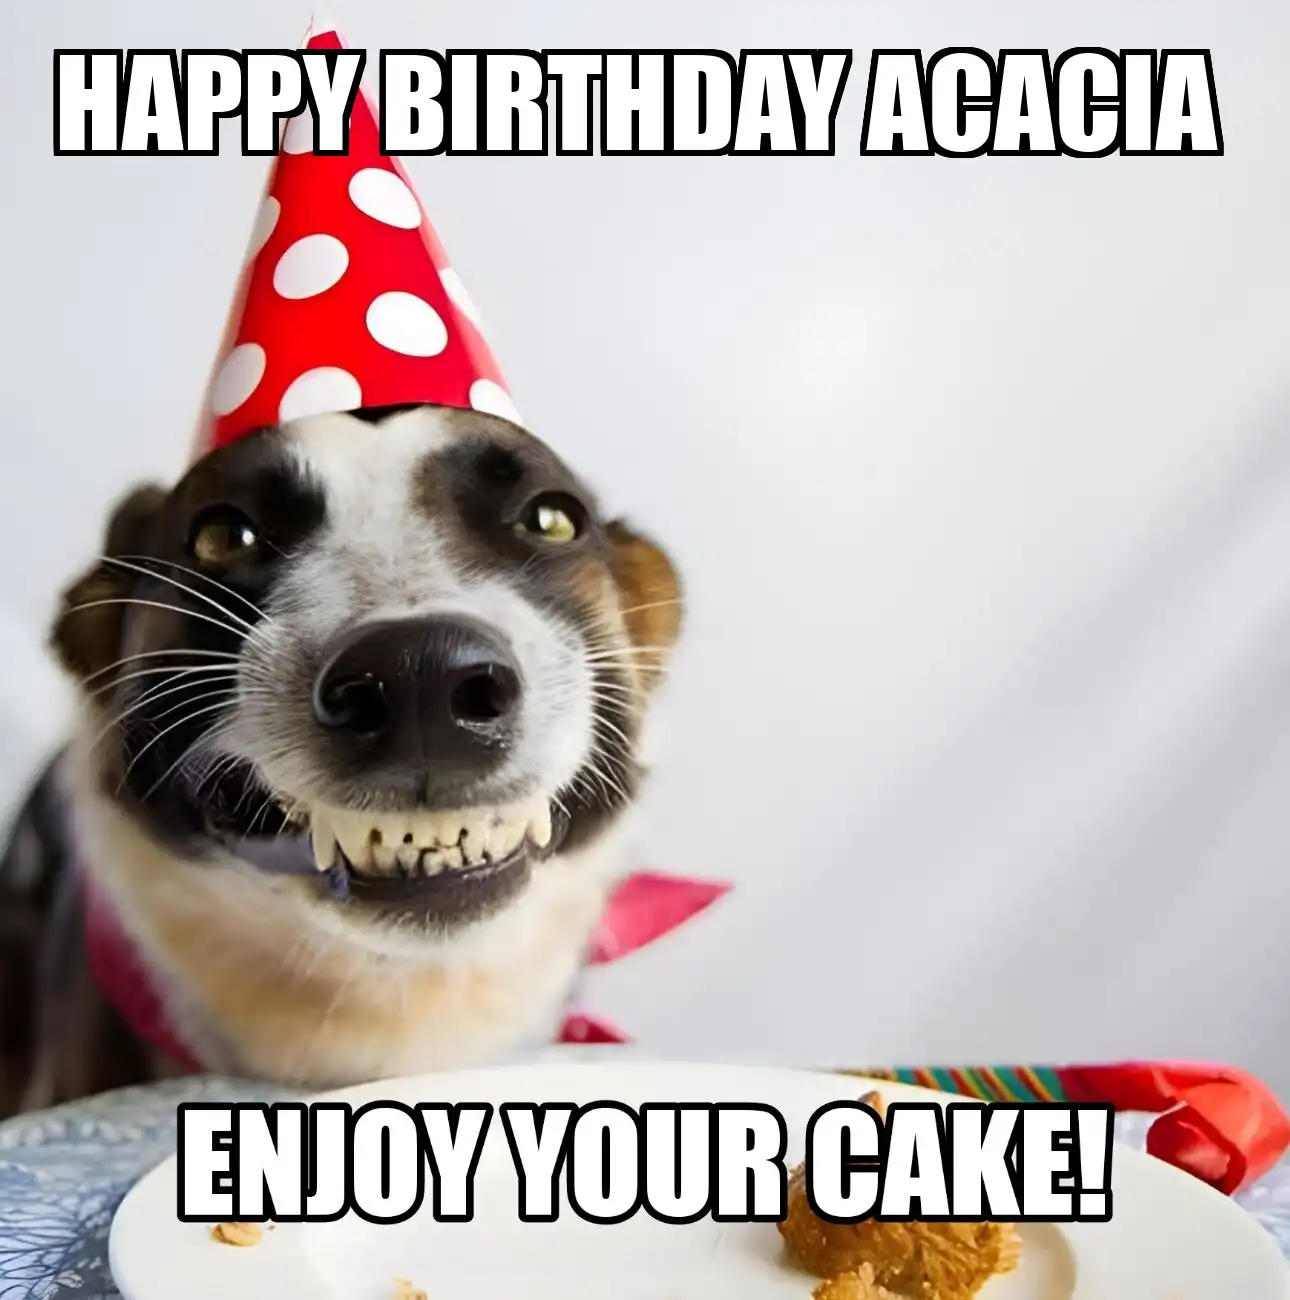 Happy Birthday Acacia Enjoy Your Cake Dog Meme